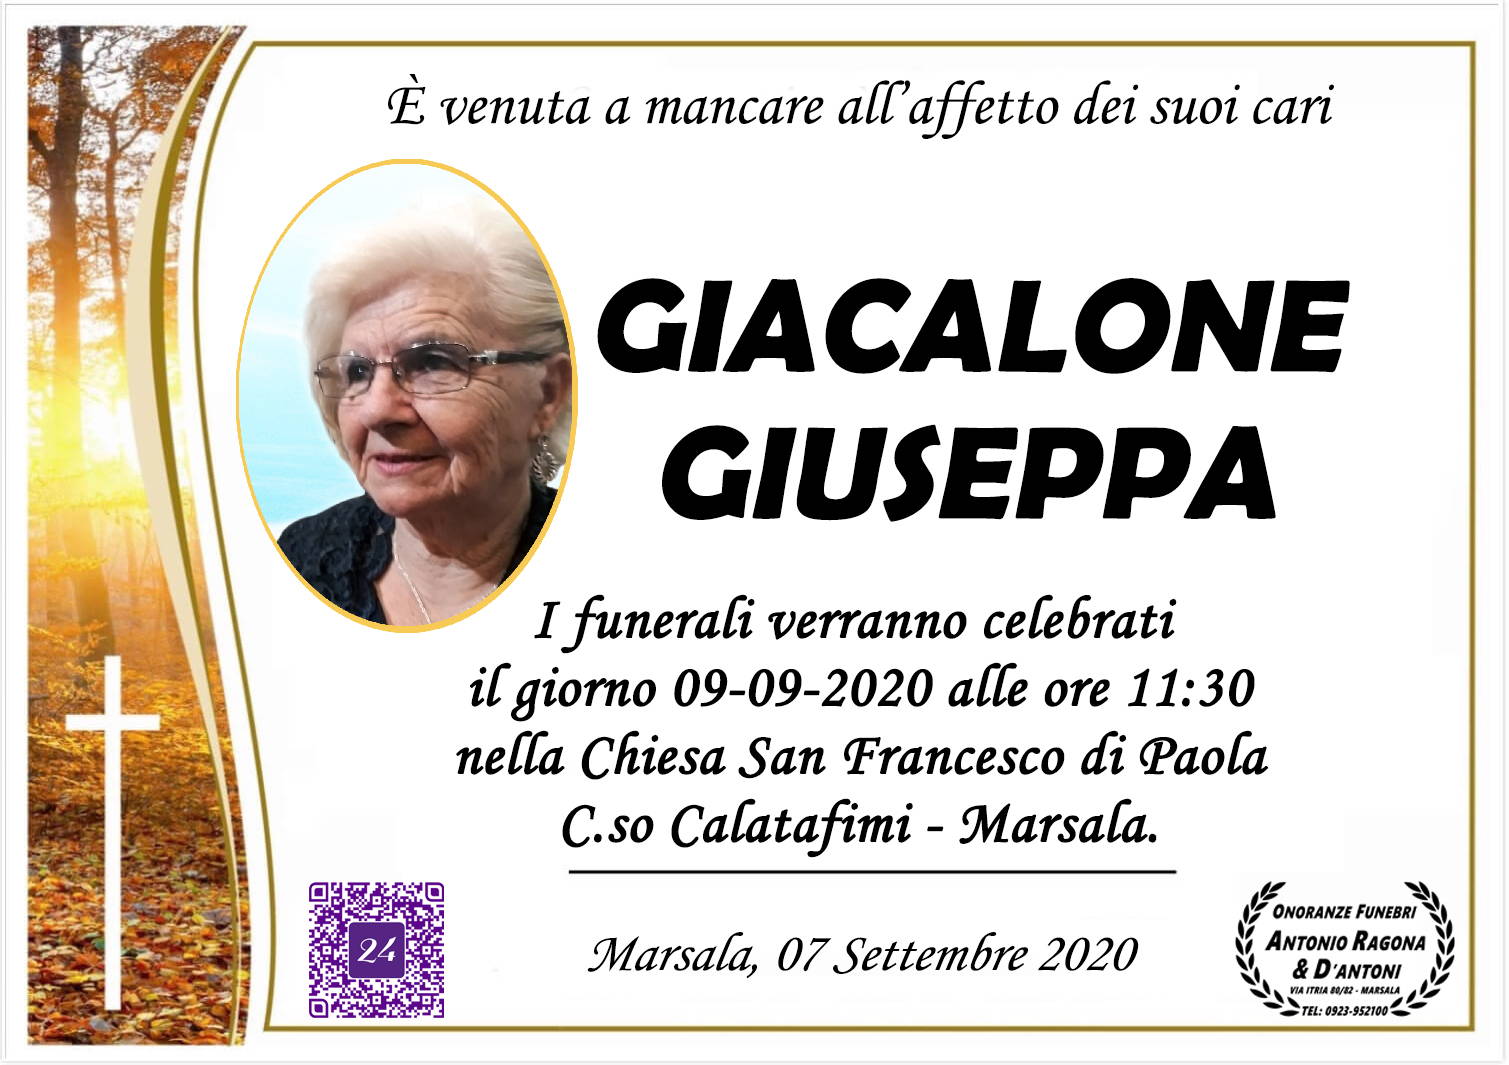 Giuseppa Giacalone